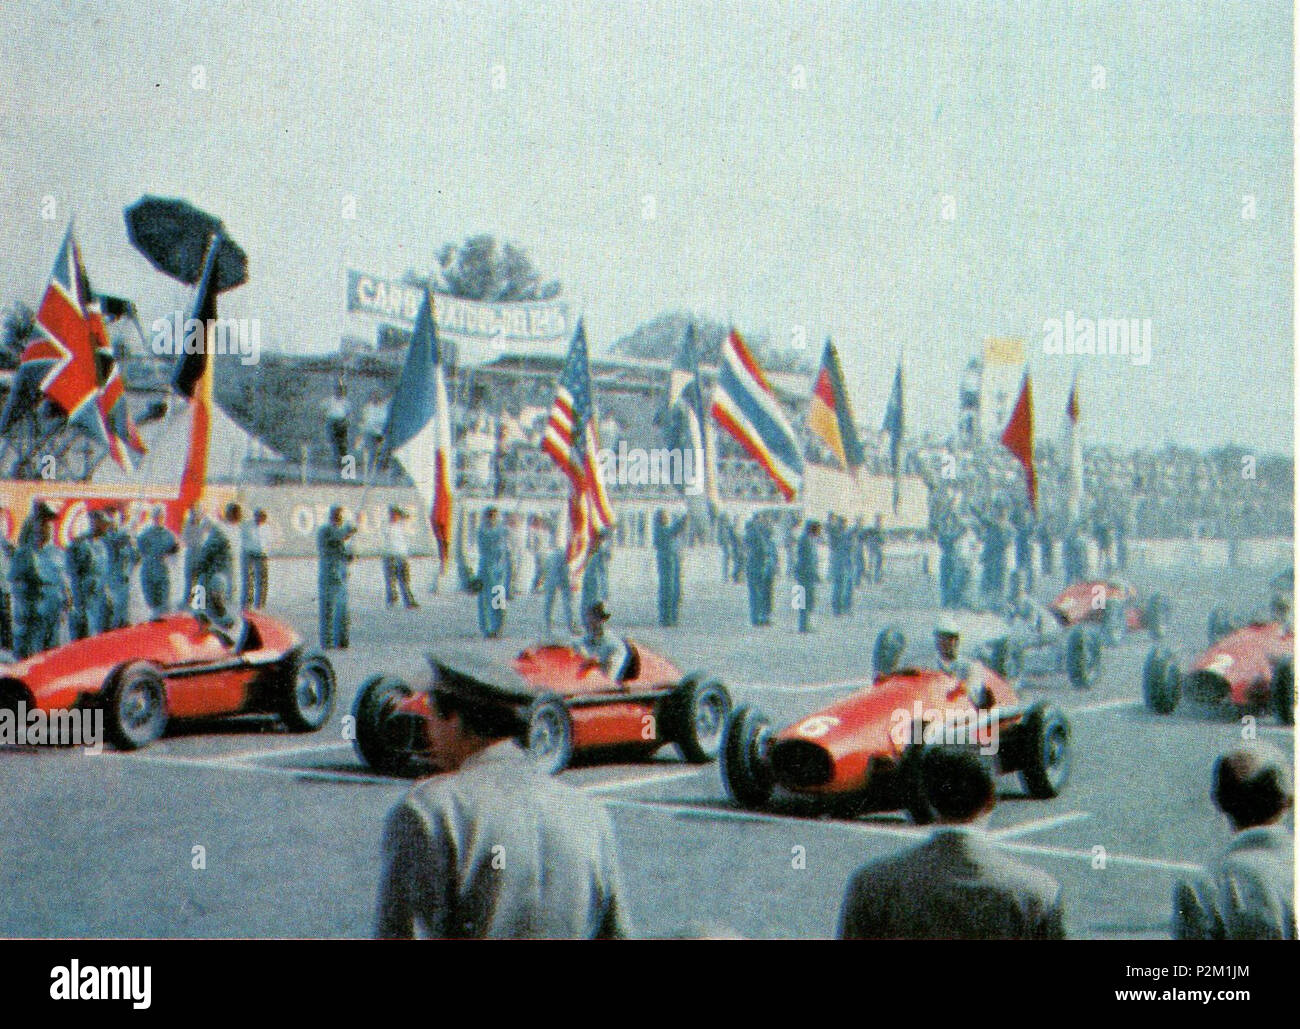 Anglais : La grille de départ pour le Grand Prix d'Italie 1953 à Monza  Italiano : La Griglia di partenza del GP d'Italie 1953 Monza un . 13  septembre 1953. Inconnu 37 GpItalia1953 Photo Stock - Alamy